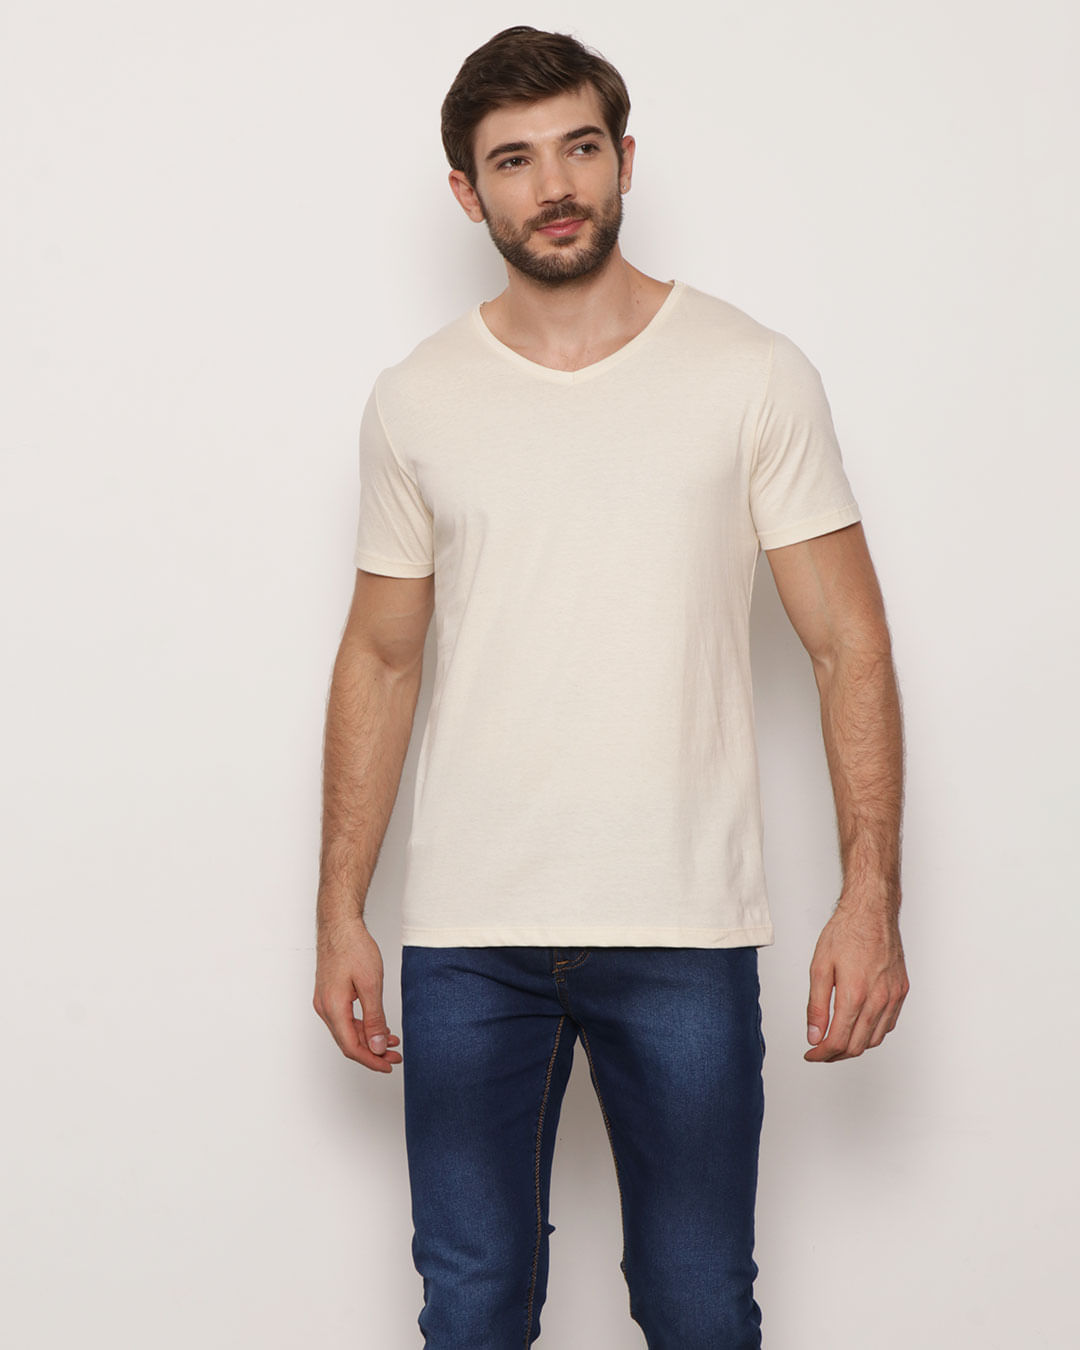 T-shirt Camisa sem mangas Casacos, Roblox Muscle, camiseta, branco png